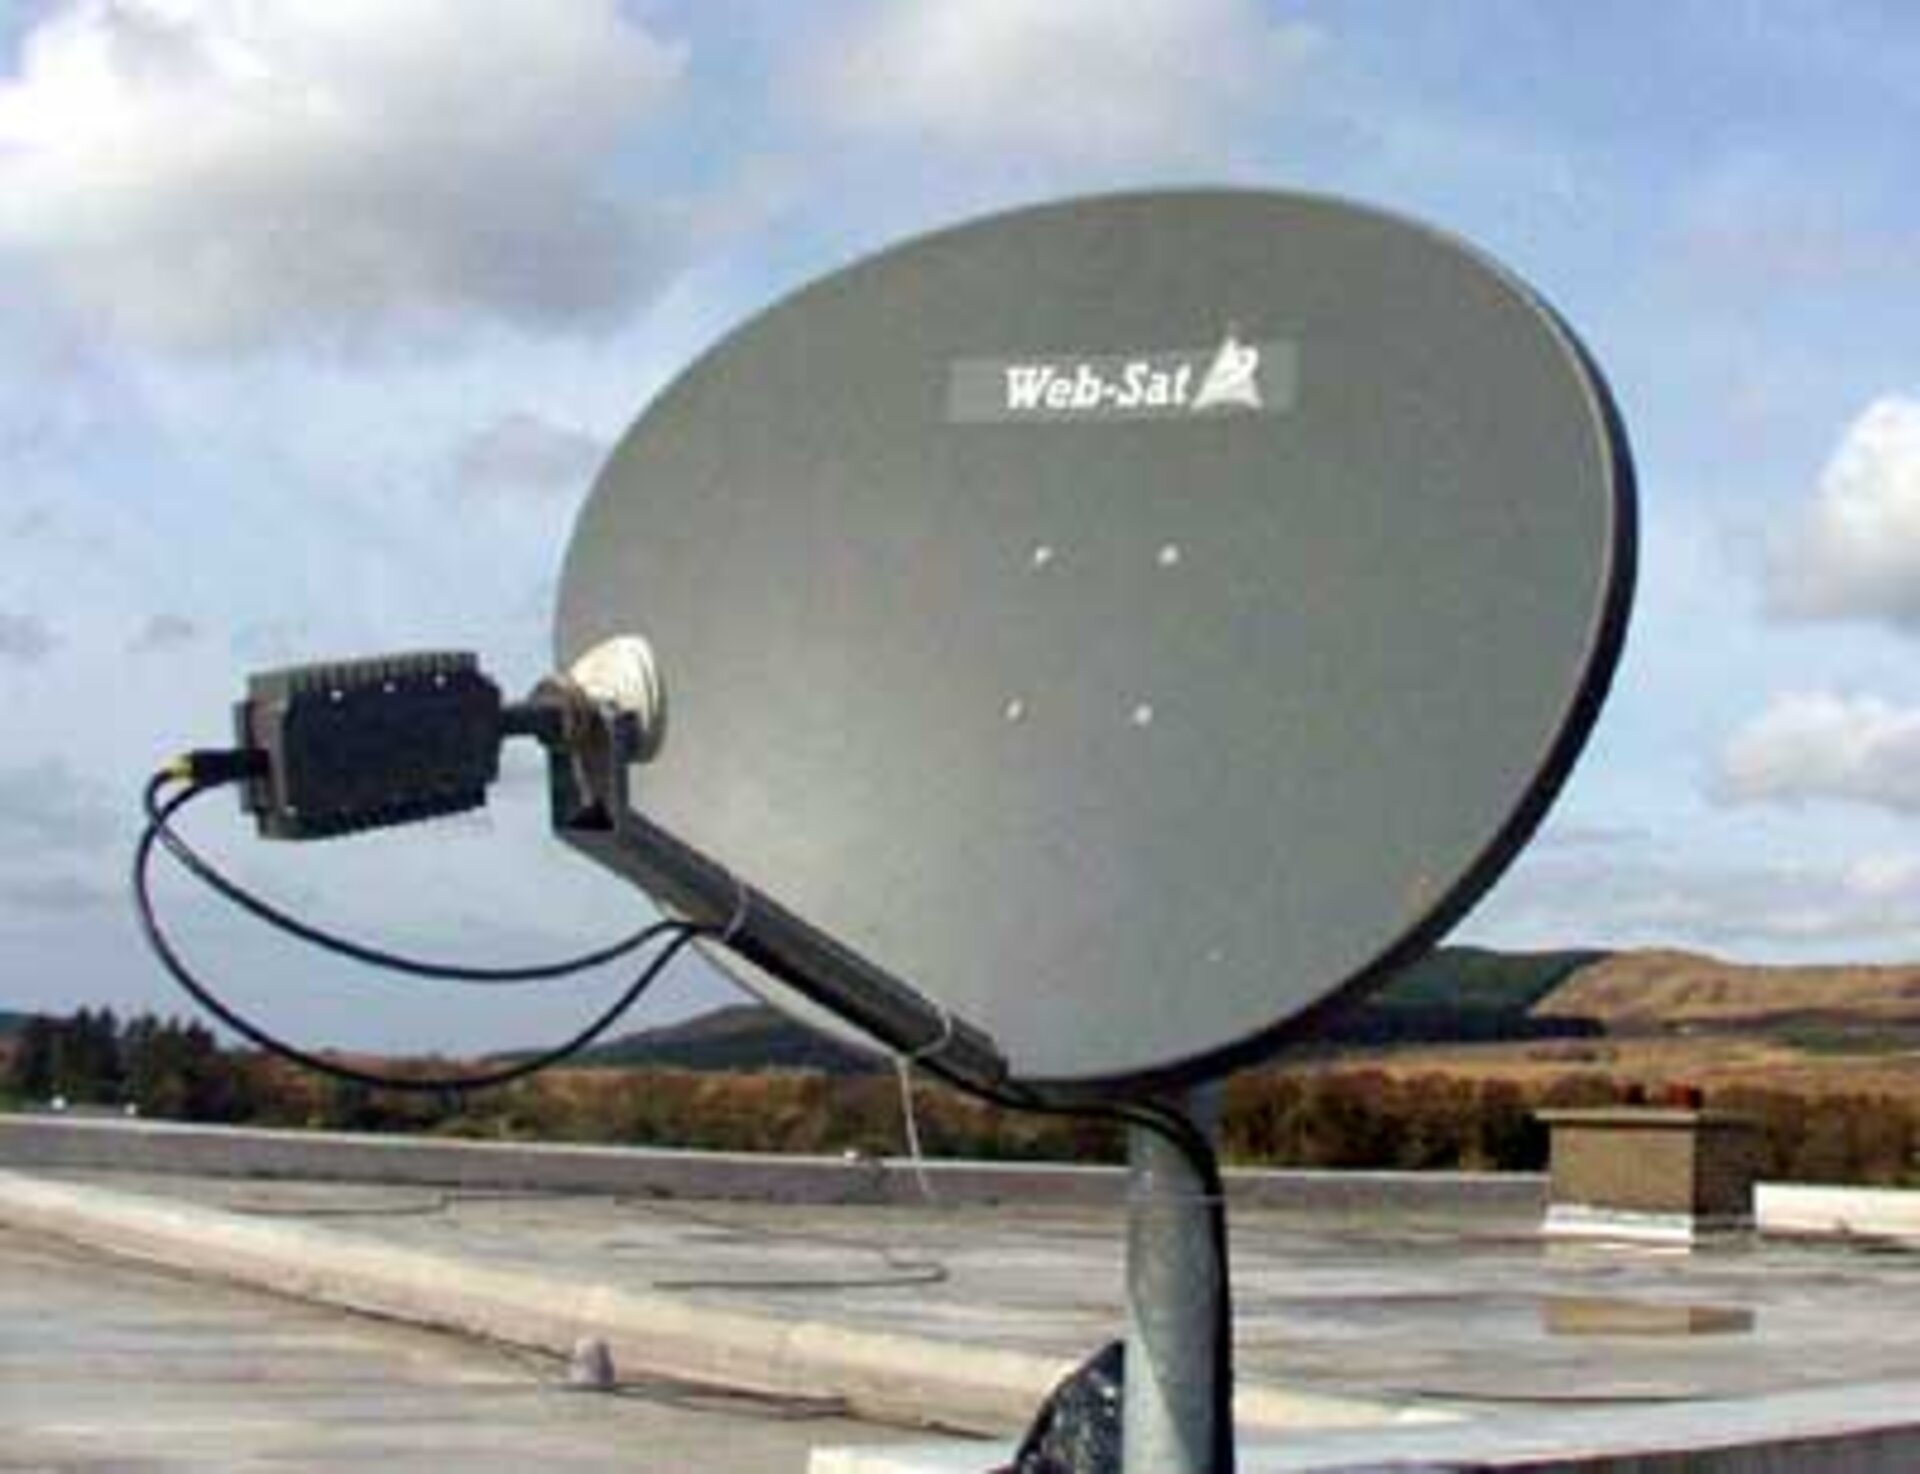 Web-Sat satellite dish